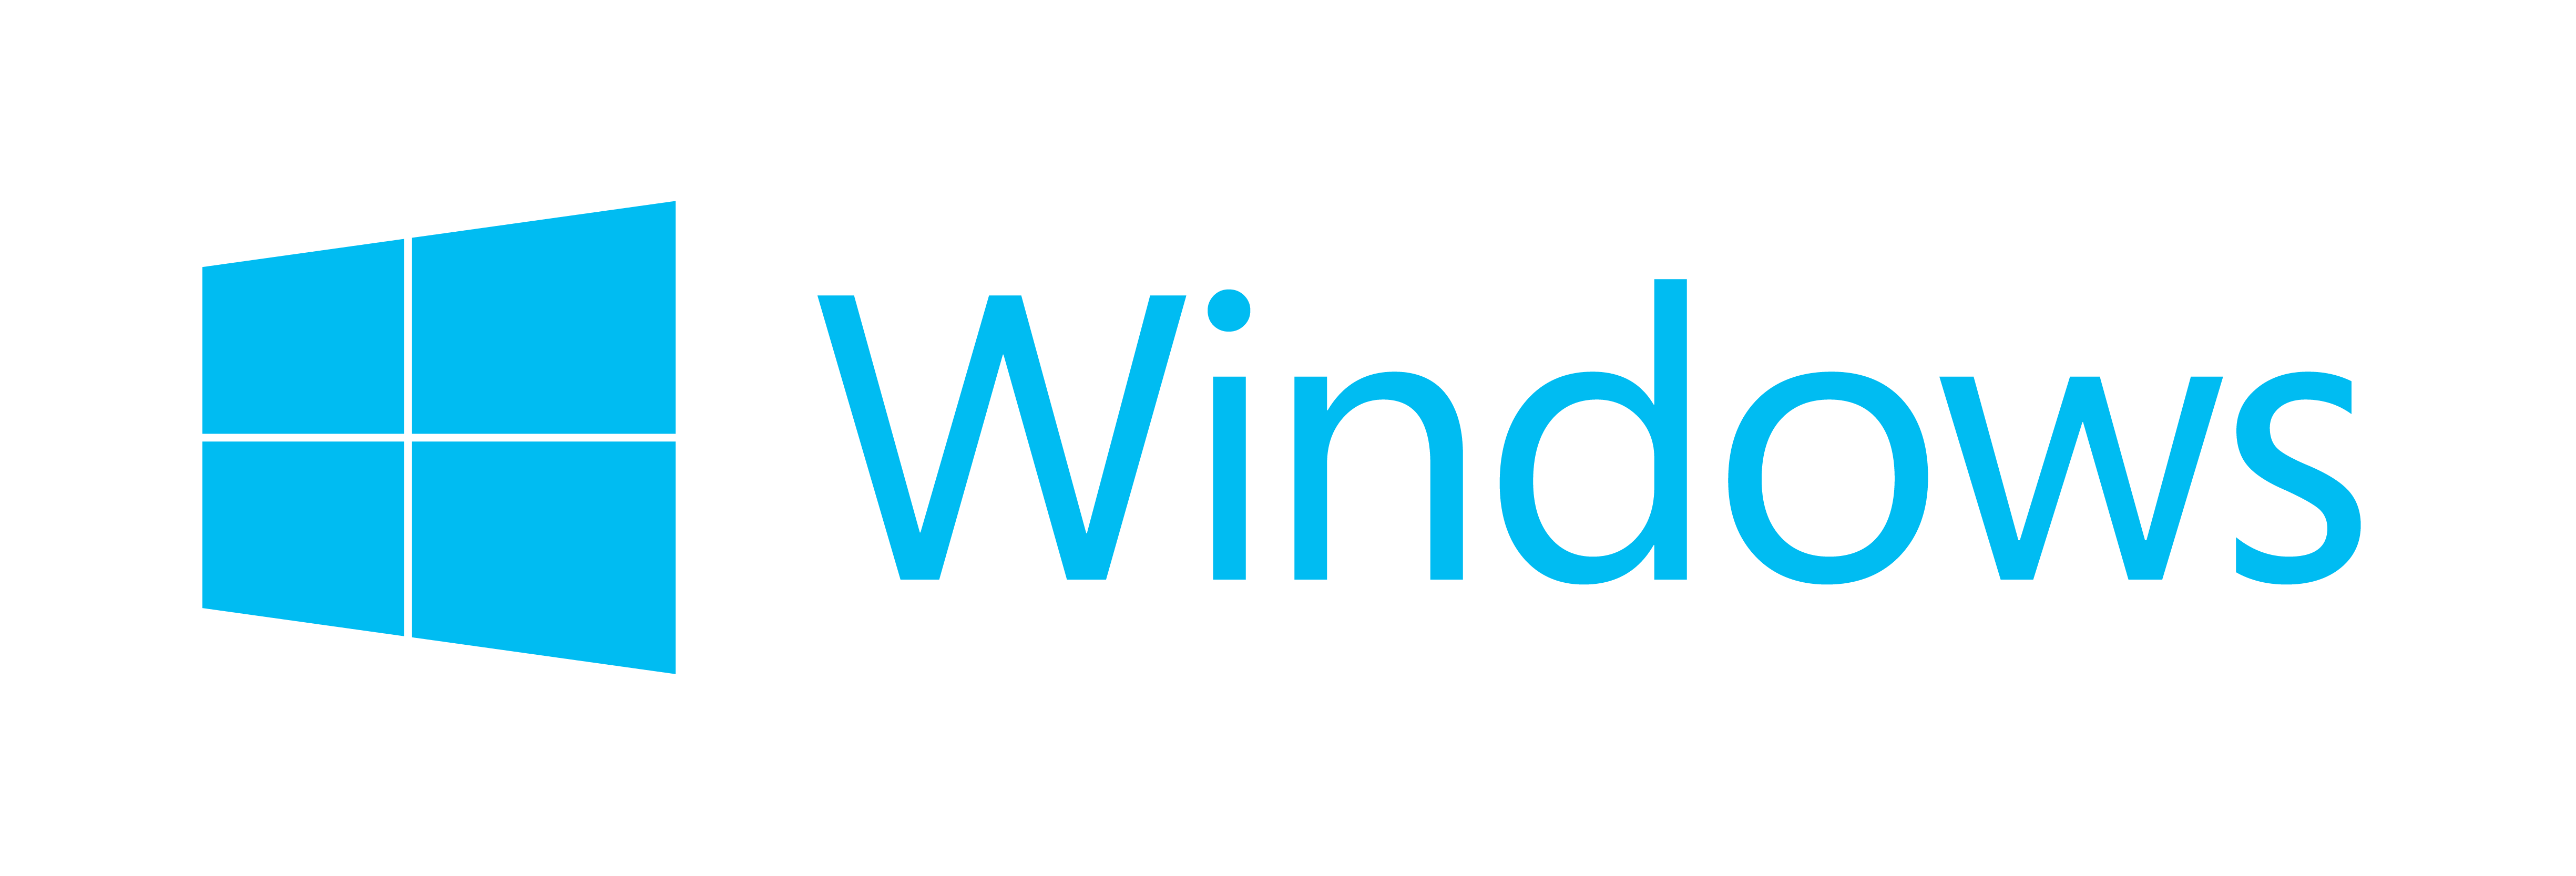 Windows_logo_Cyan_rgb_D.png